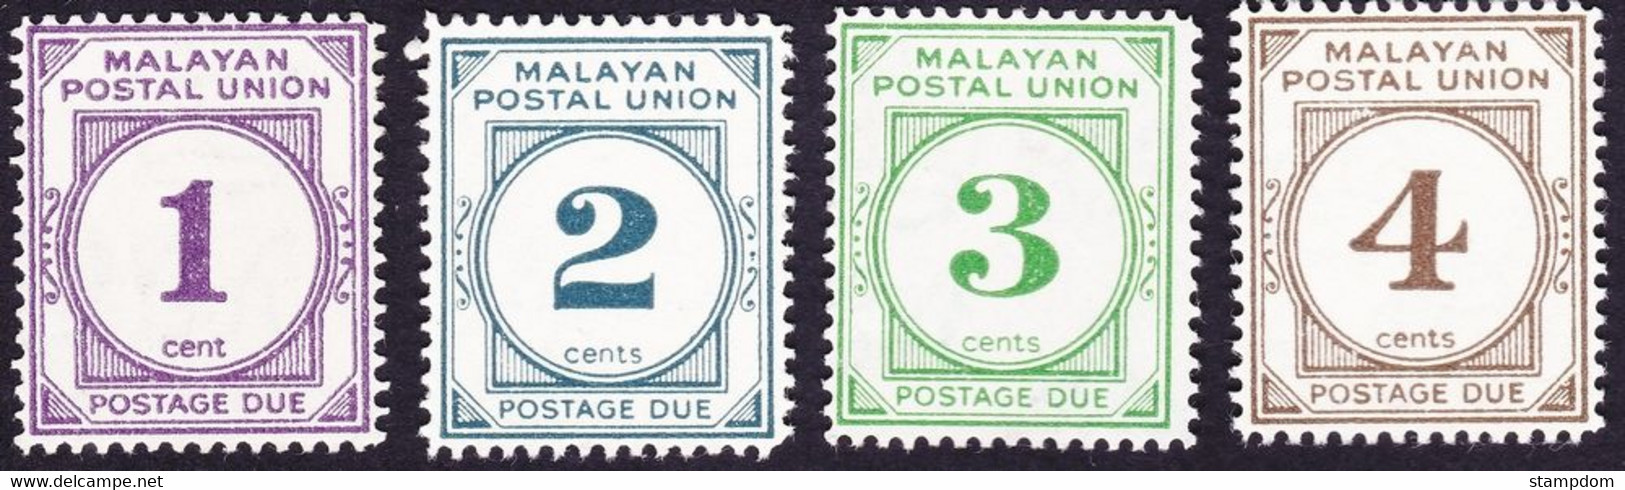 MLAYAN POSTAL UNION 1952-53 1c-4c Postage Due P14 Sc#J20-23 - MH @E2036 - Malayan Postal Union